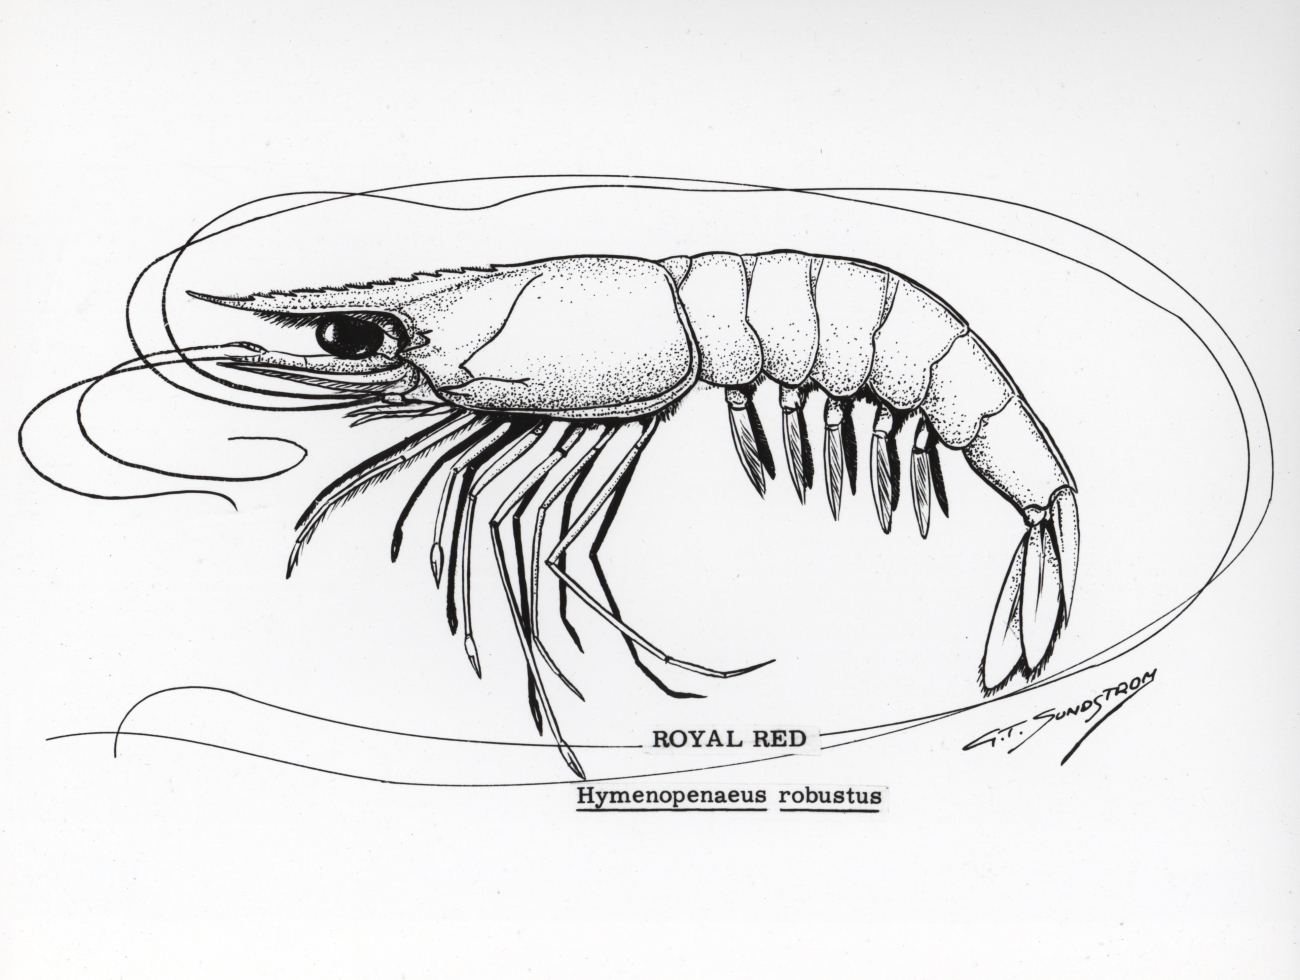 Royal red shrimp drawing (Hymenopenaeus robustus)